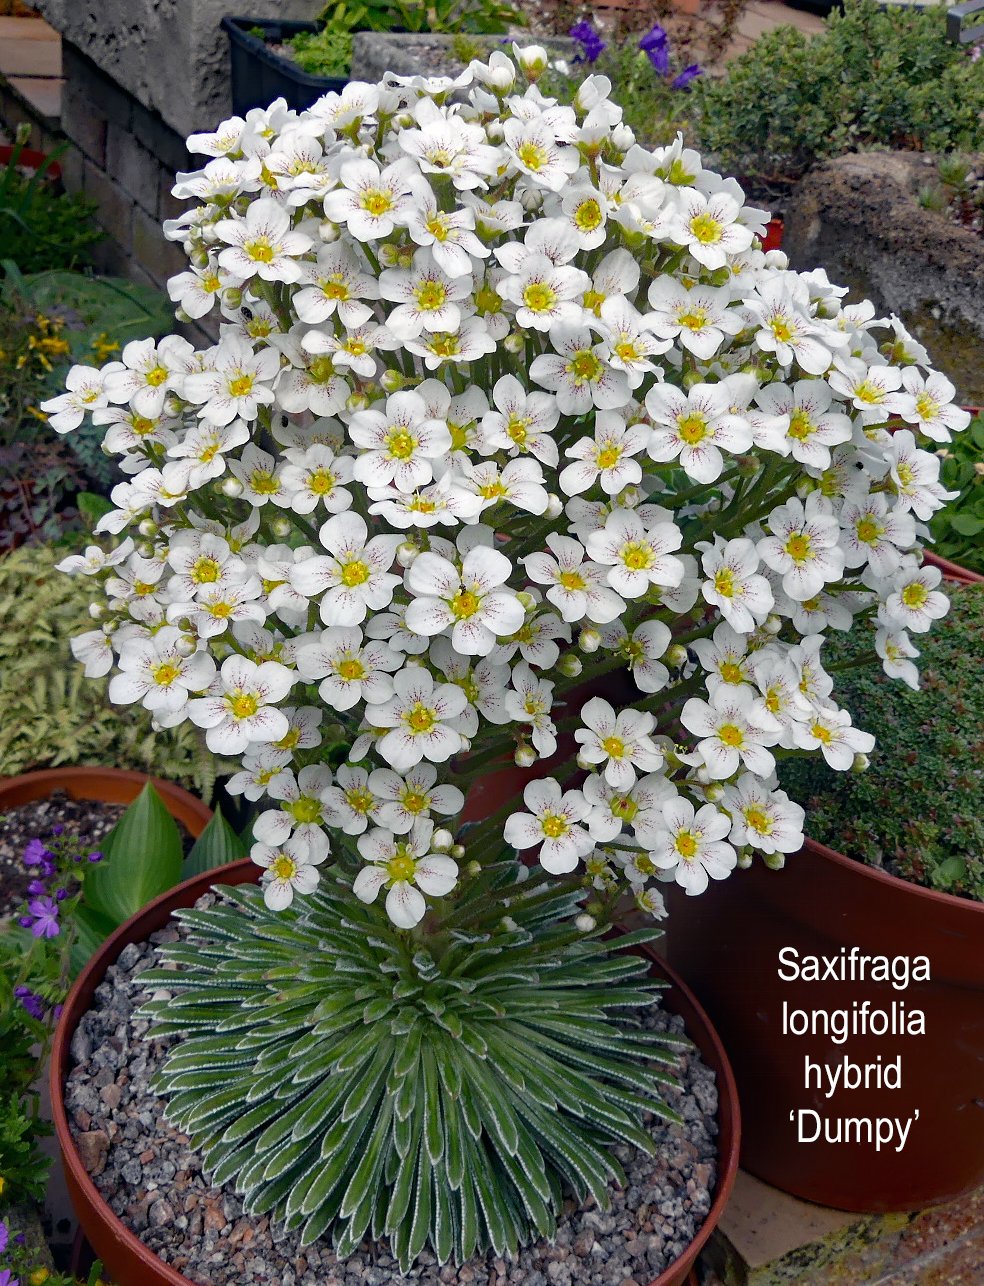 Saxifraga longifolia 'Dumpy'